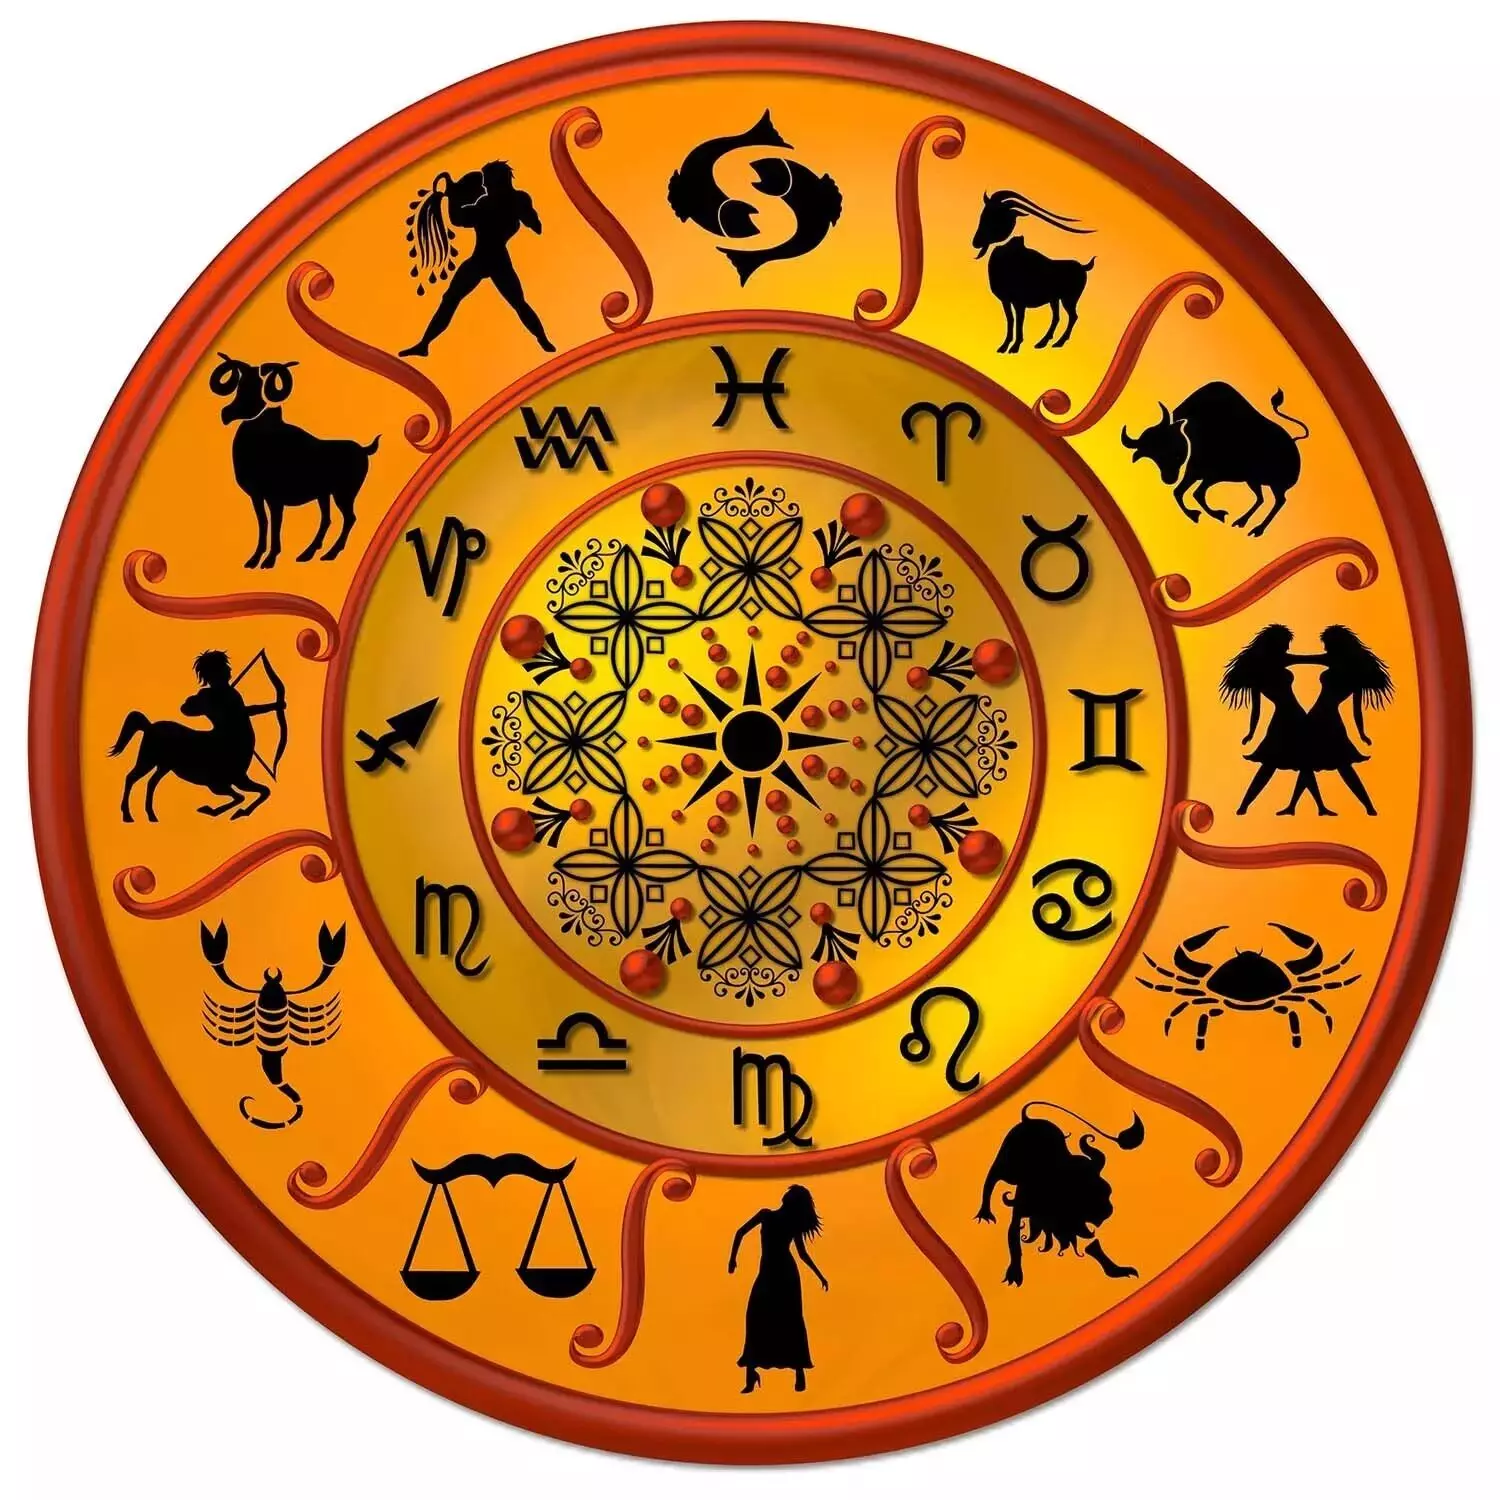 01  Novembar  – Know your todays horoscope